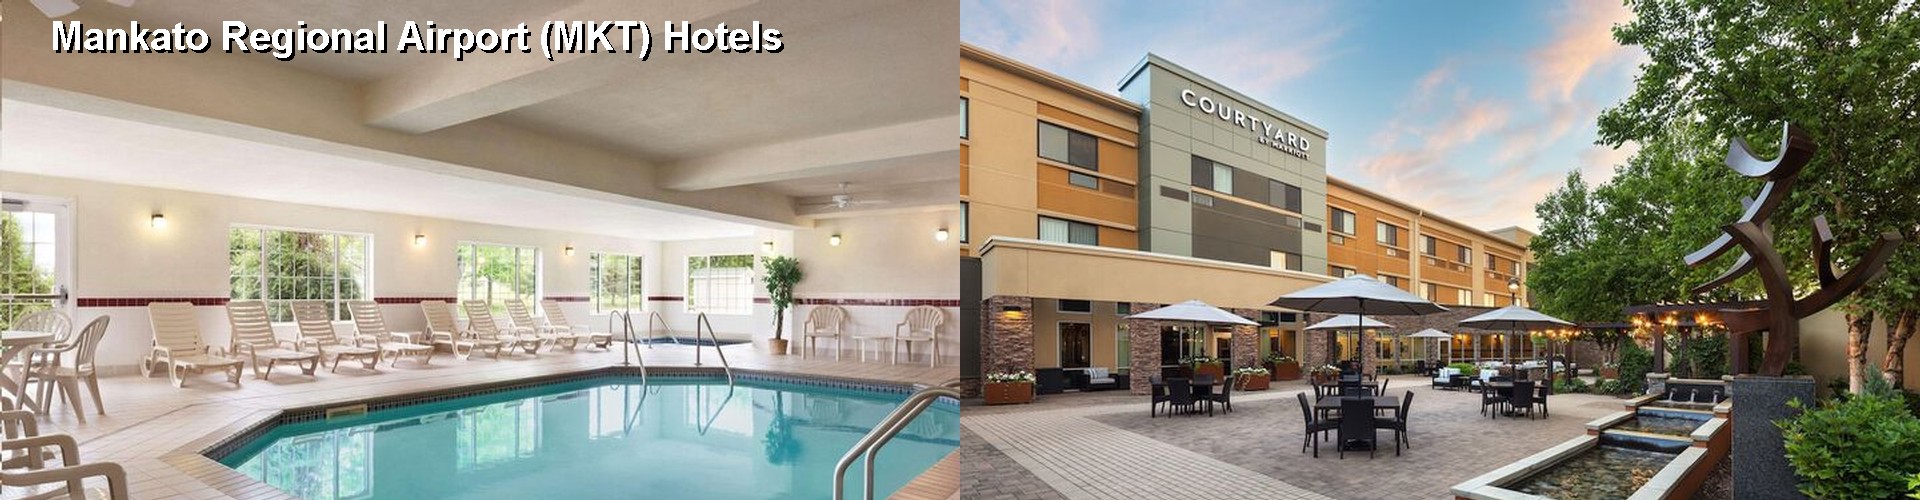 5 Best Hotels near Mankato Regional Airport (MKT)